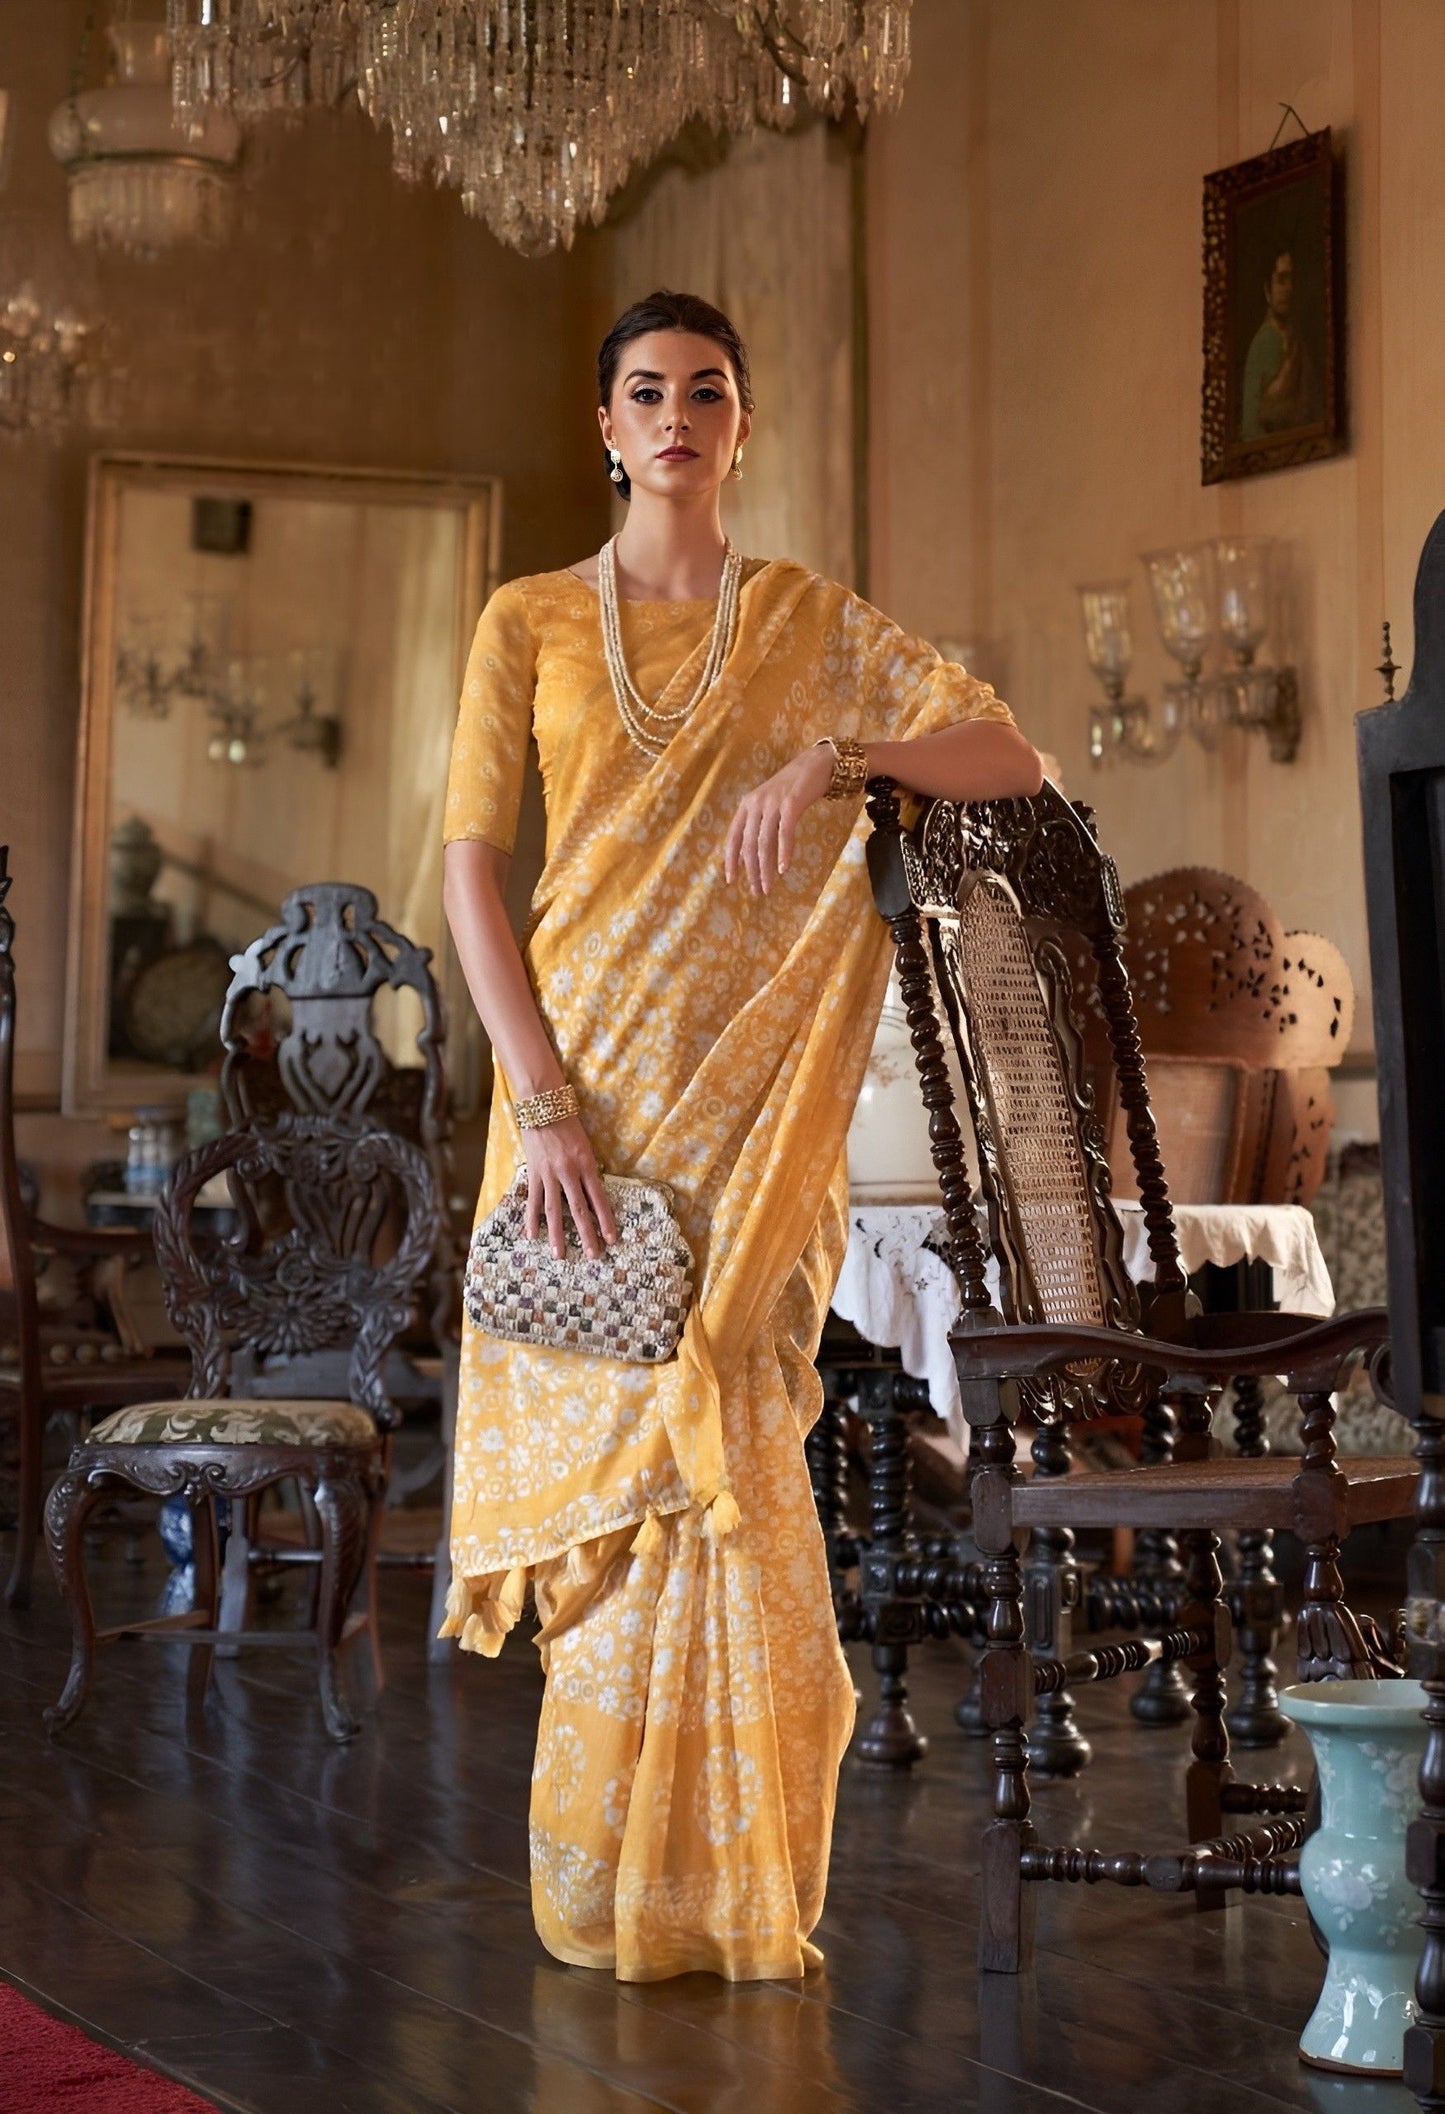 EKKTARA Saree For Women Yellow Colour Soft Linen Cotton Saree With Unstitched Blouse